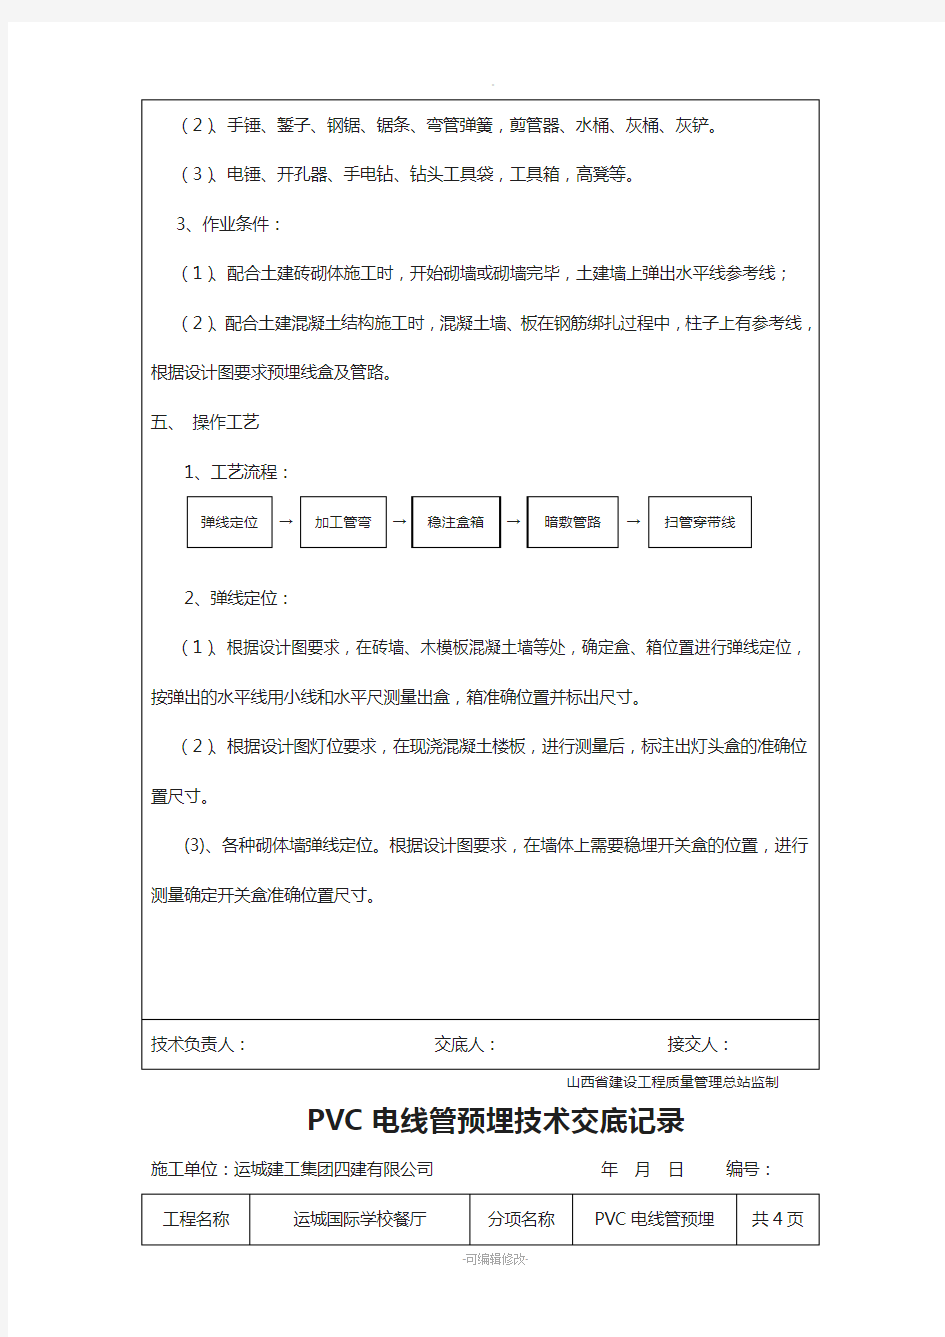 PVC电线管预埋技术交底记录